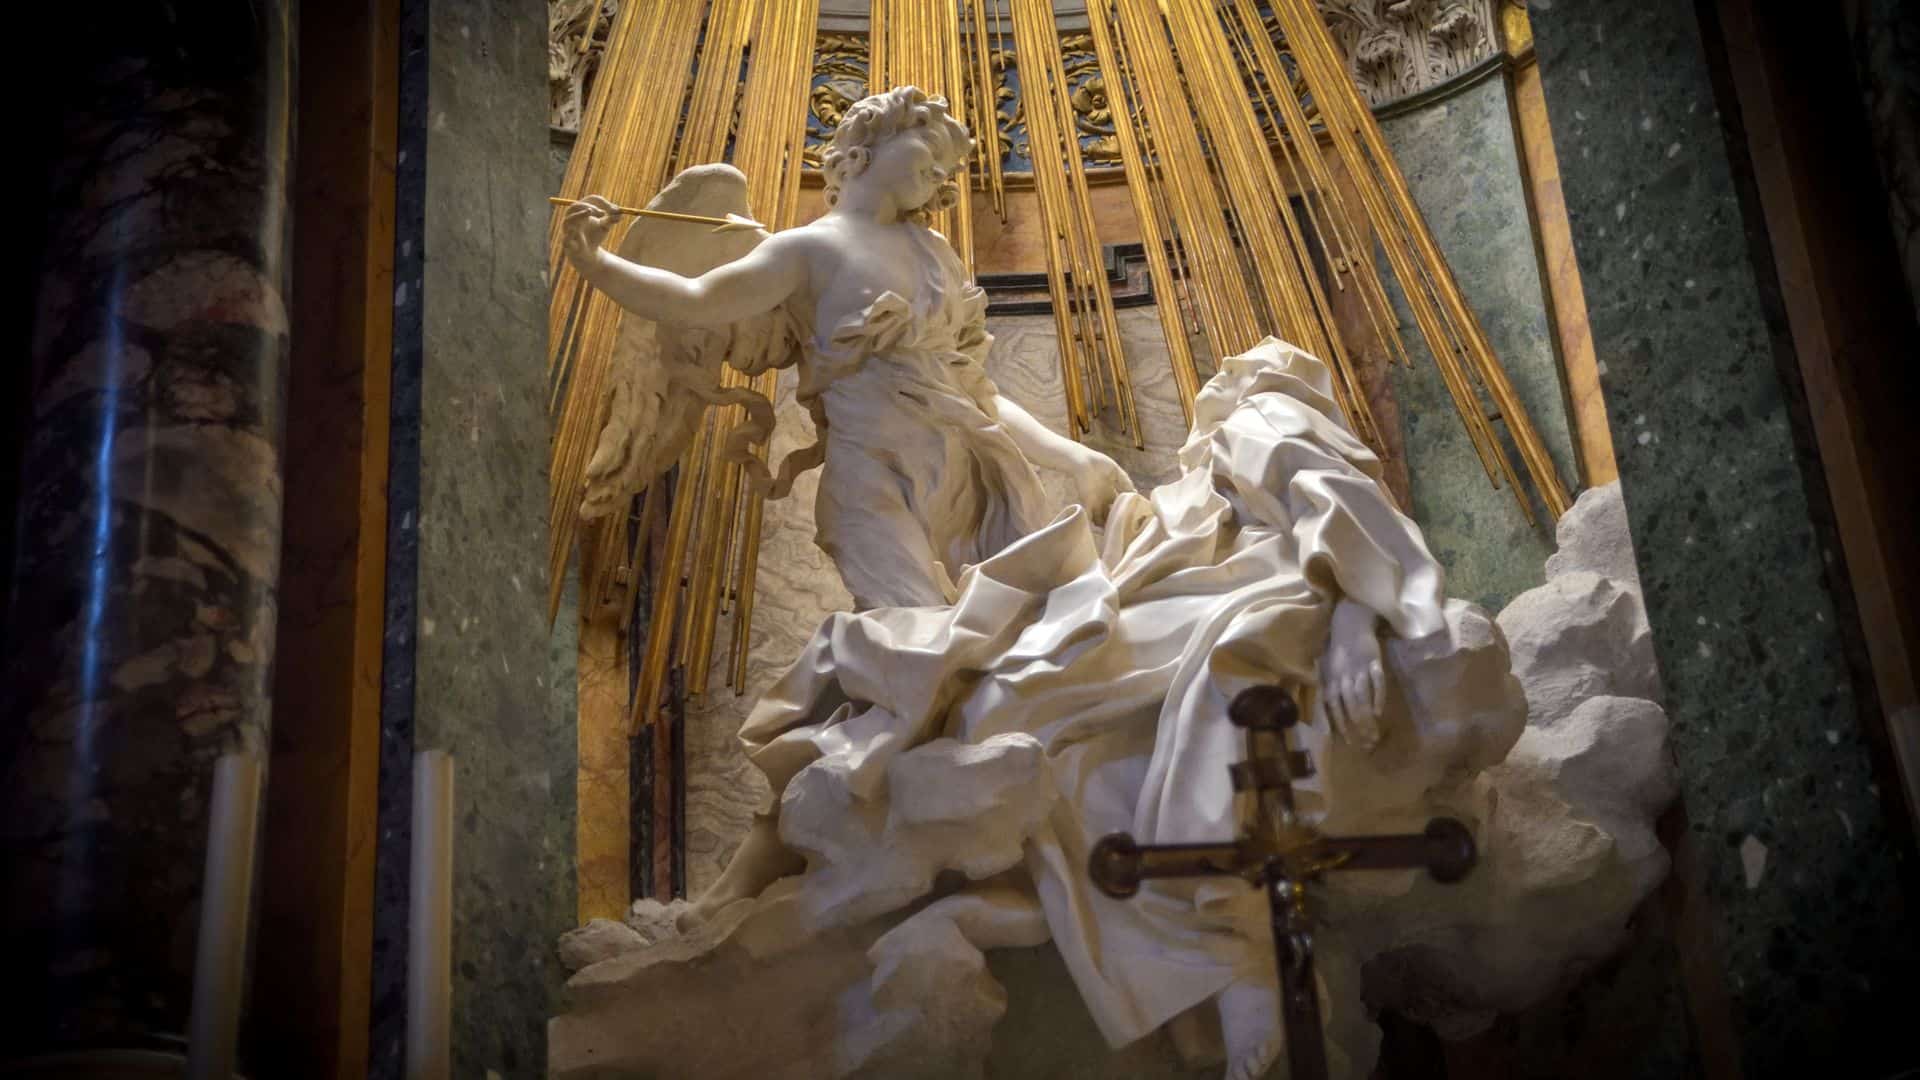 Bernini's sculpture of the Ecstasy of Saint Teresa inside the Santa Maria della Vittoria church.